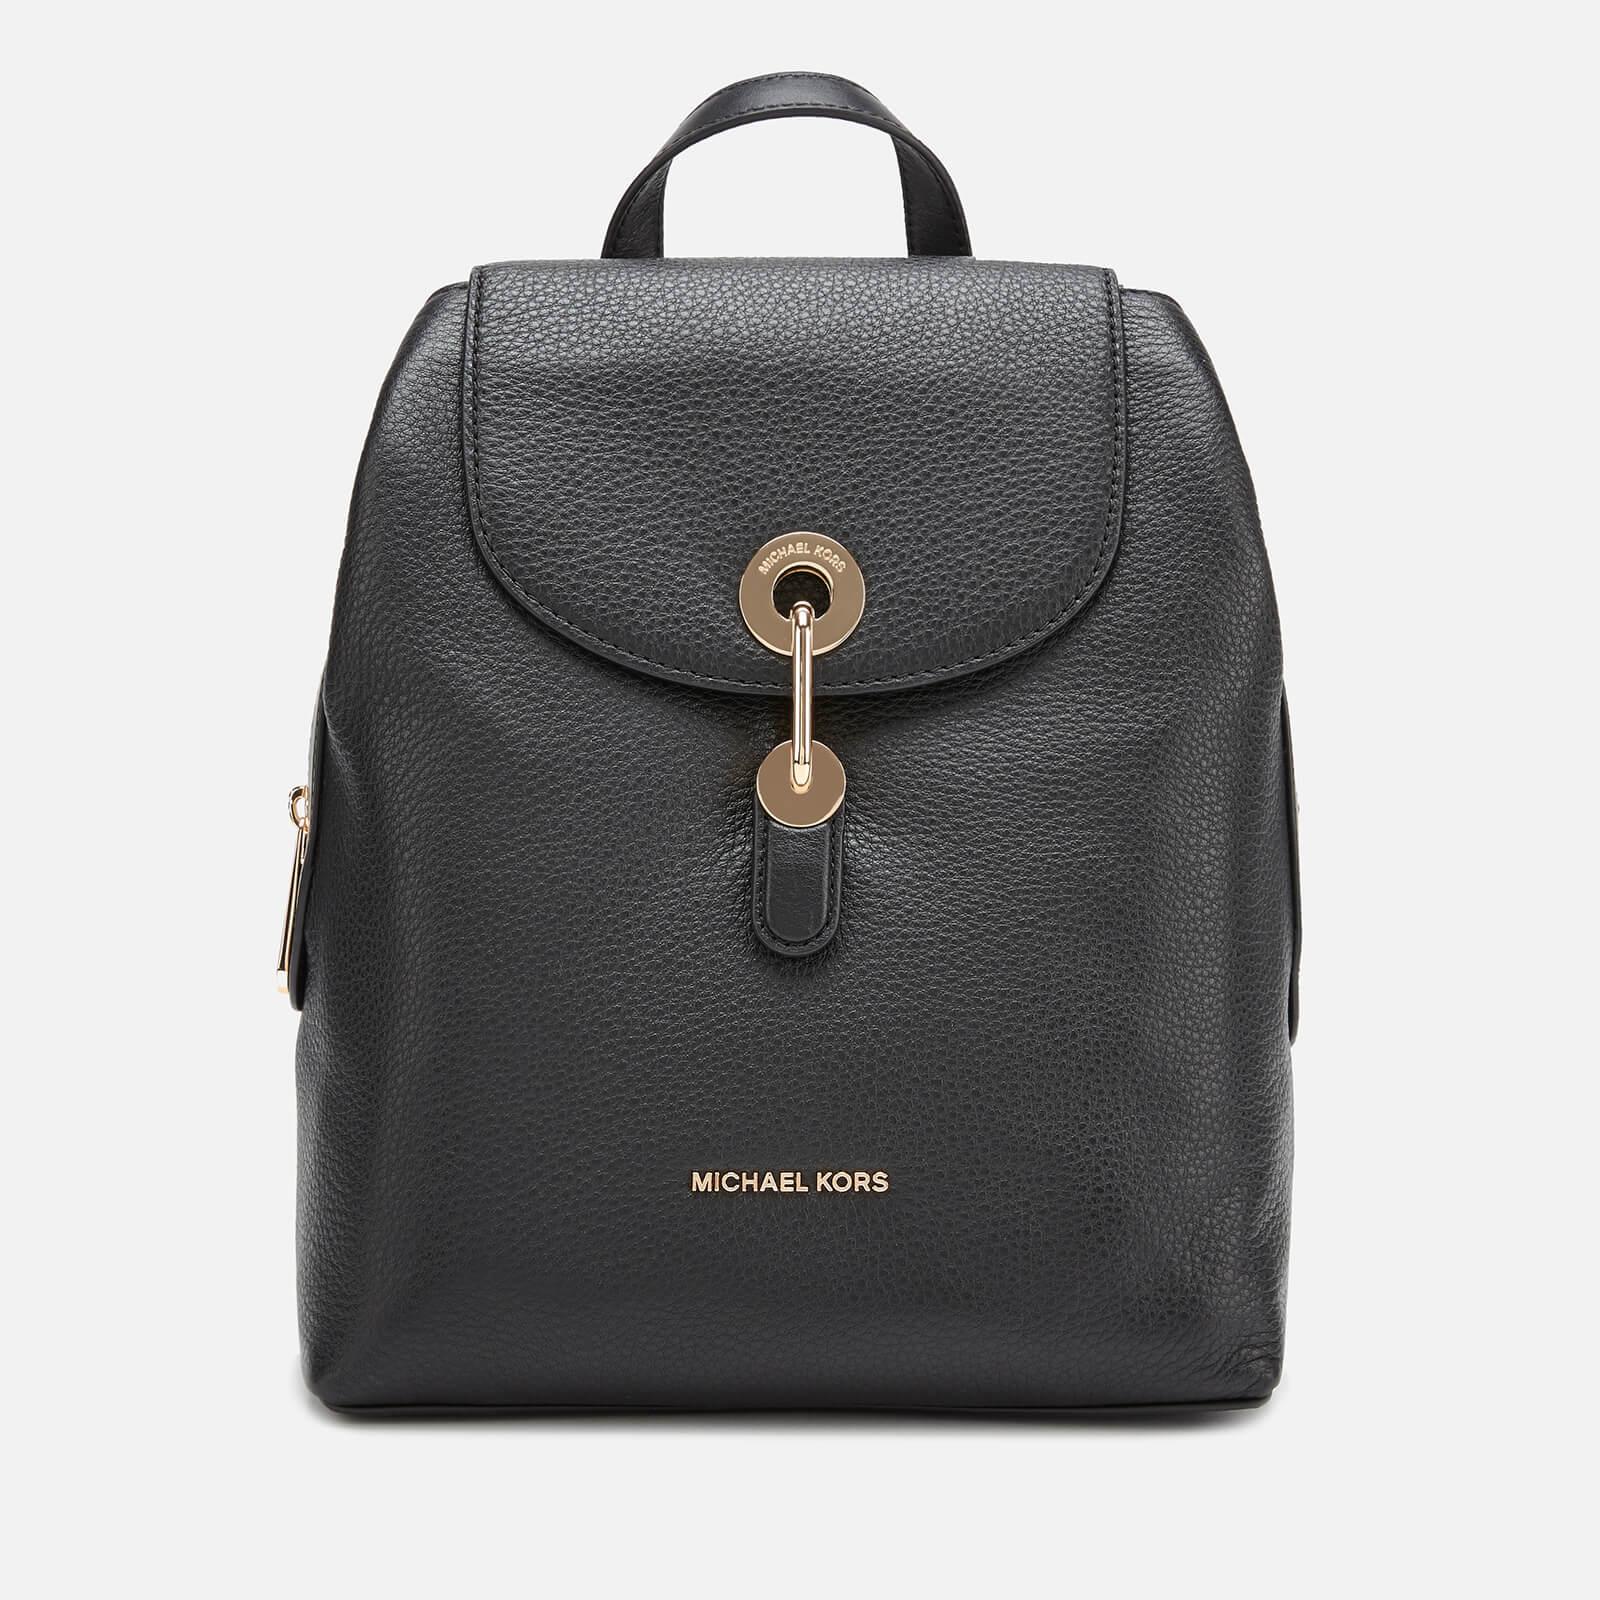 MICHAEL Michael Kors Raven Medium Backpack in Black/Gold (Black) - Save 56%  - Lyst